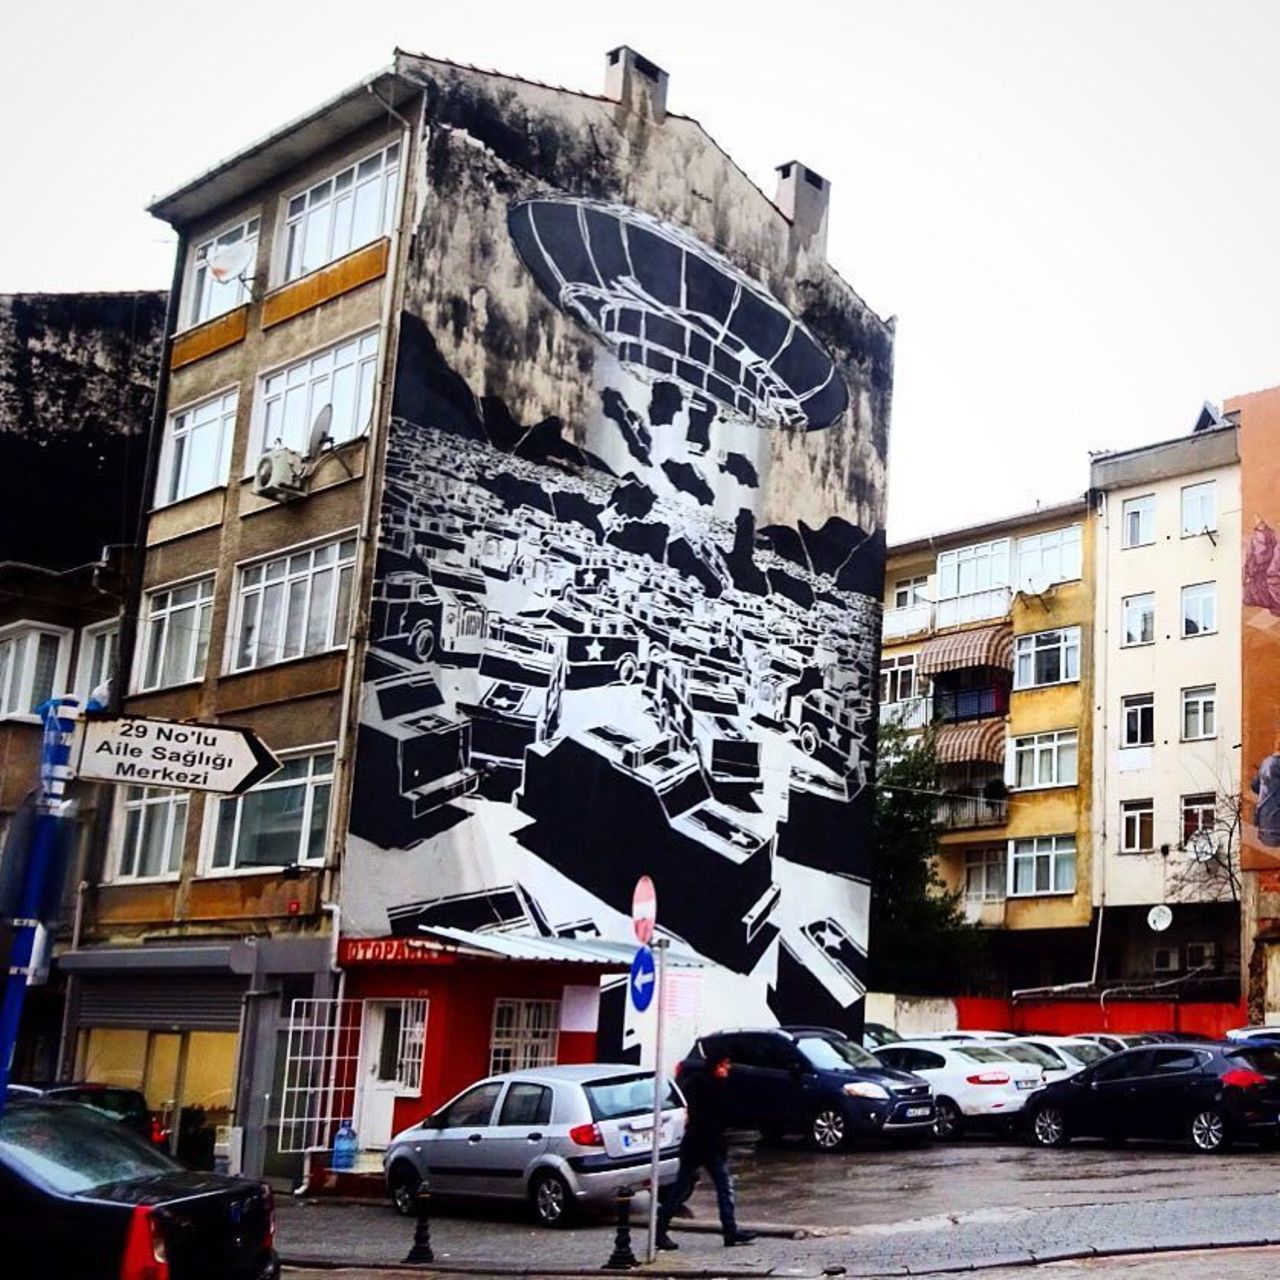 #streetart #streetartist #artist #art #arte #arteurbano #urbano #urbanart #urban #wallart #mural #cityart #graffiti… https://t.co/XnkD00w43c